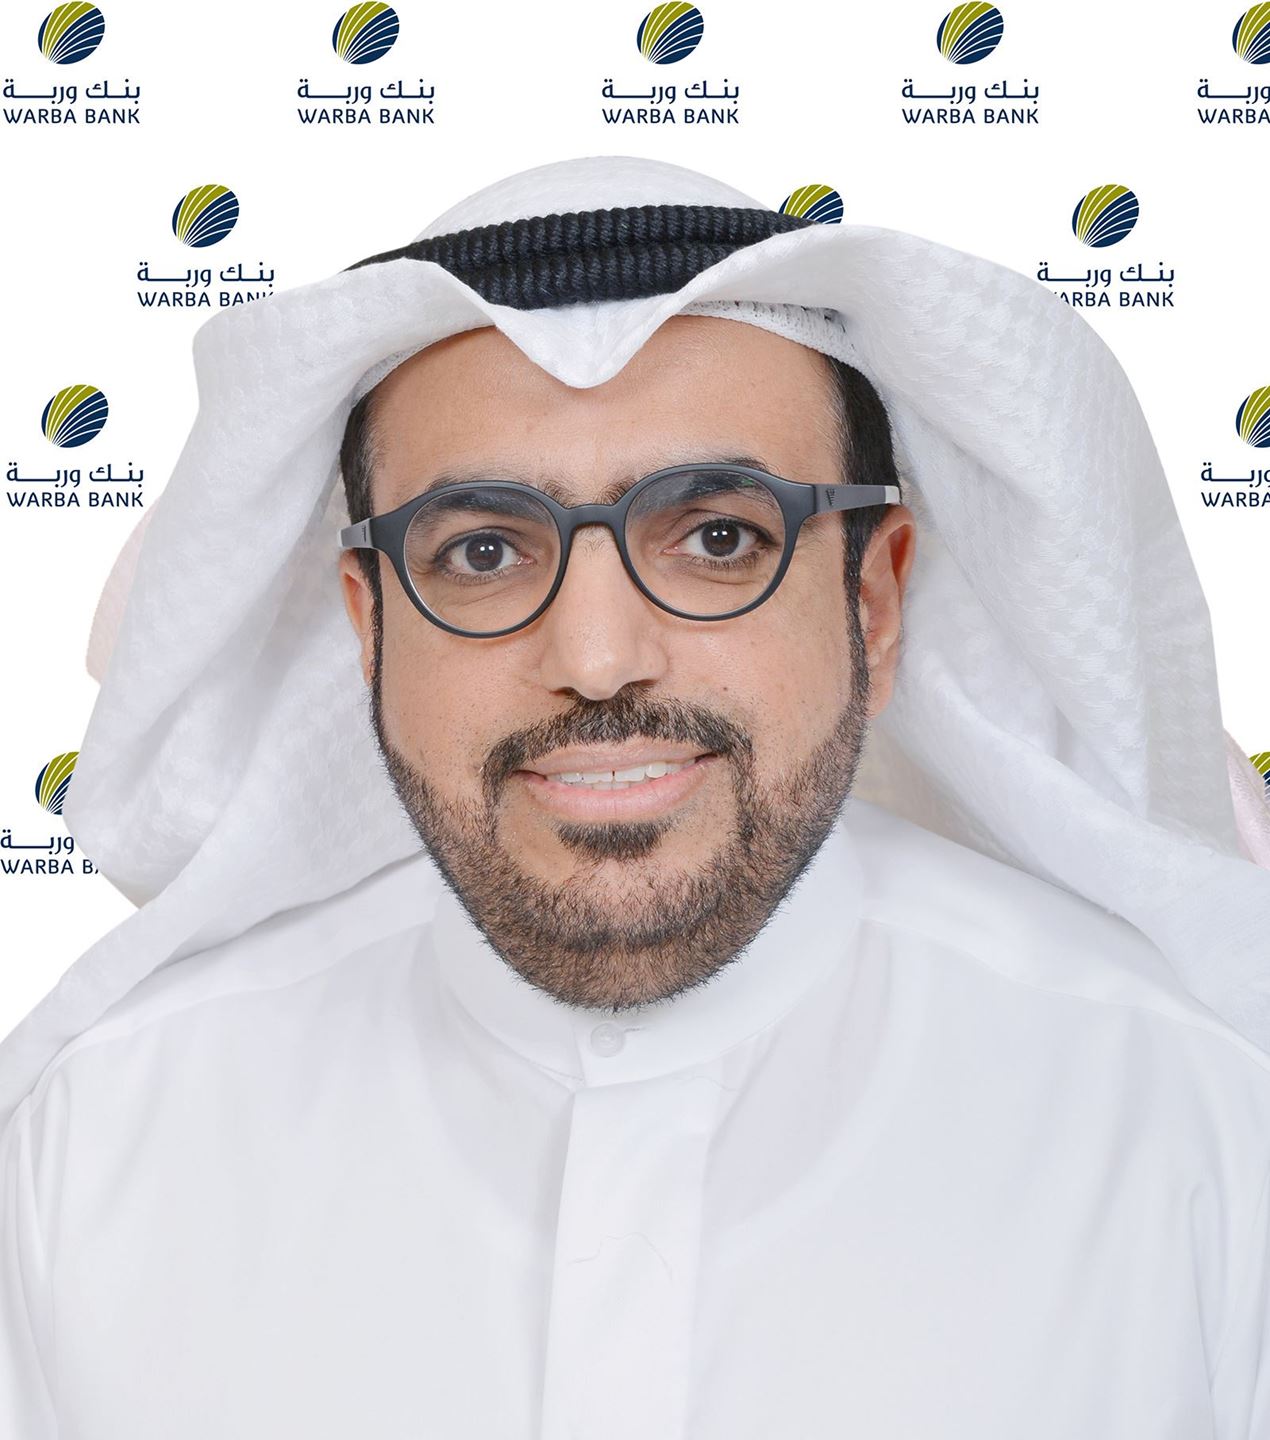 Mr. Shaheen Hamad Al-Ghanem, Warba Bank's CEO